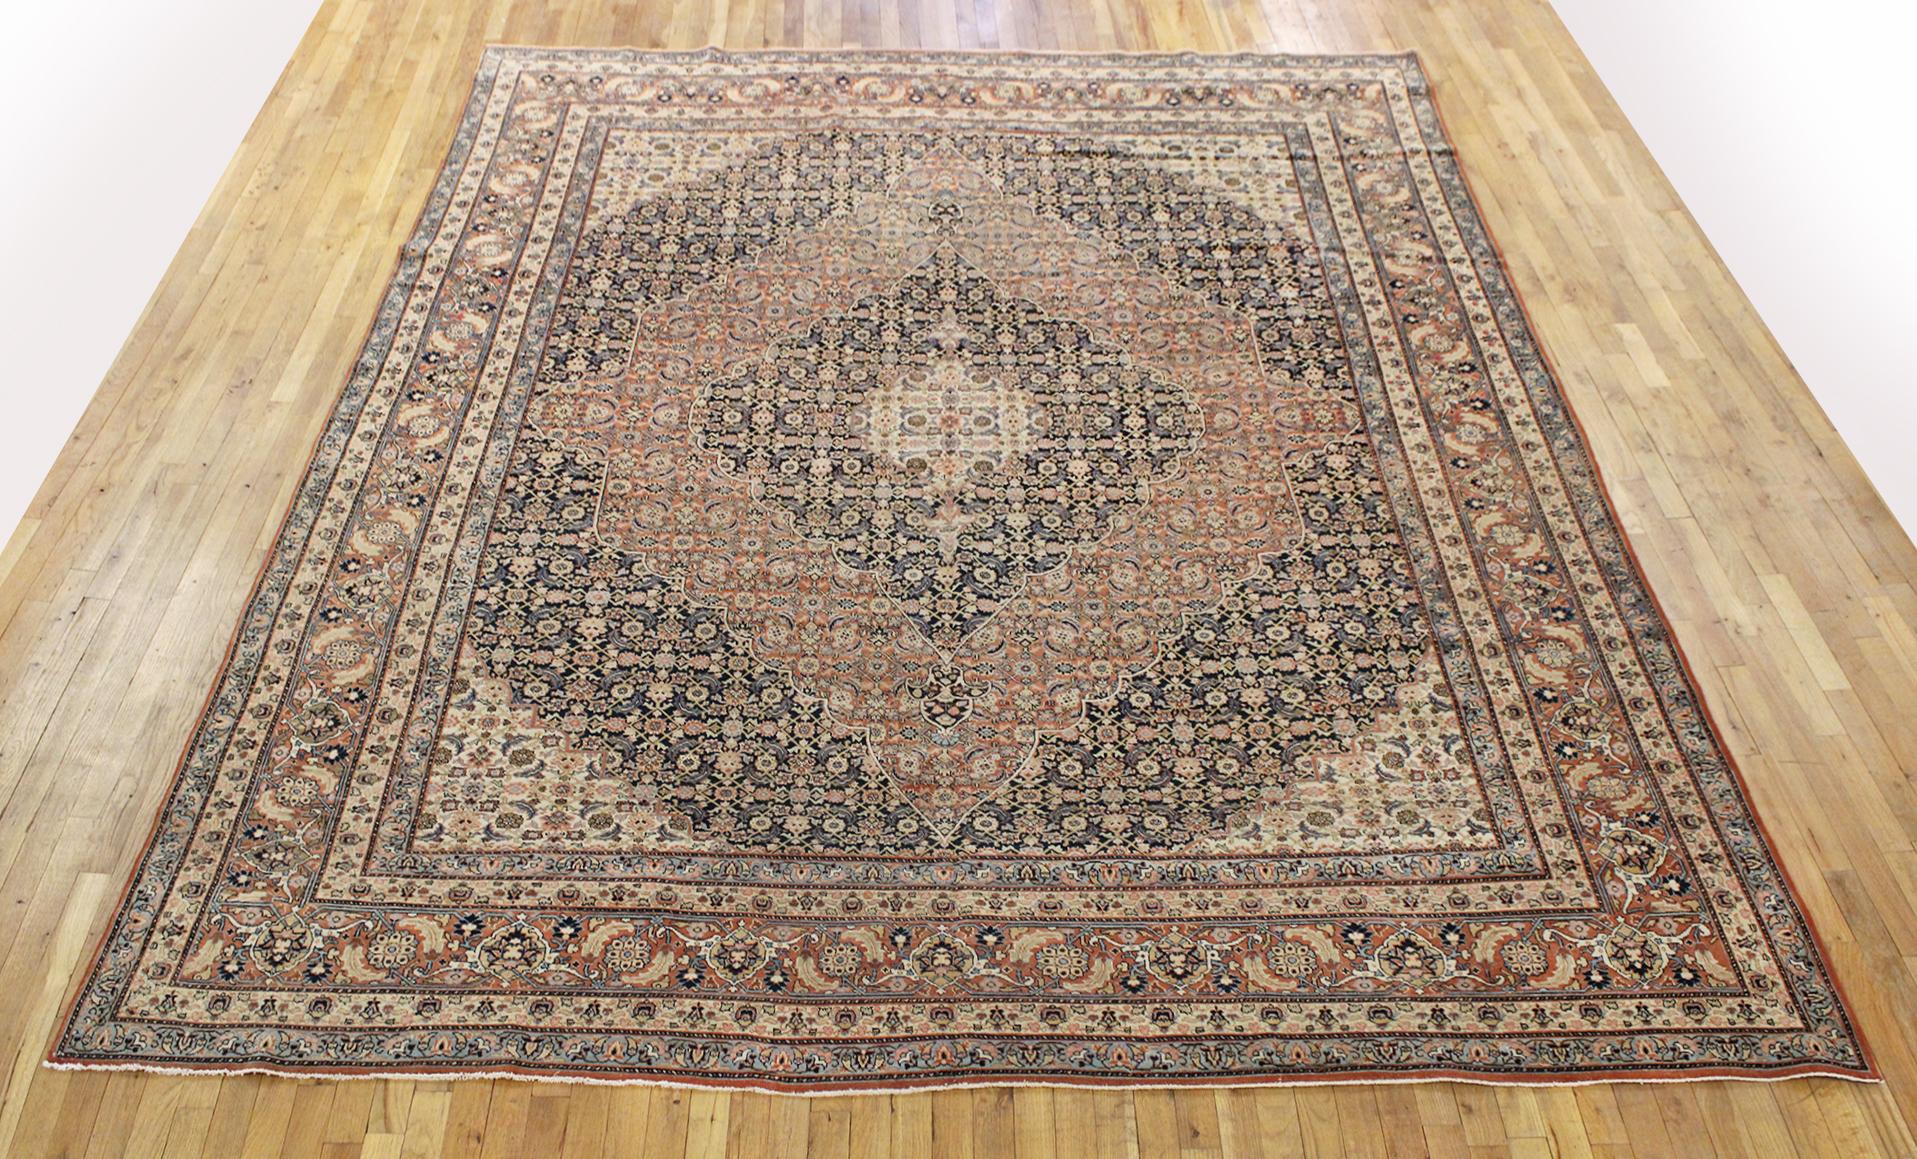 Antique Perisan Tabriz Hadji Jalili Oriental carpet, circa 1900, Room Sized

An antique Persian Tabriz Hadji Jalili oriental carpet, circa 1900. Size: 12'5